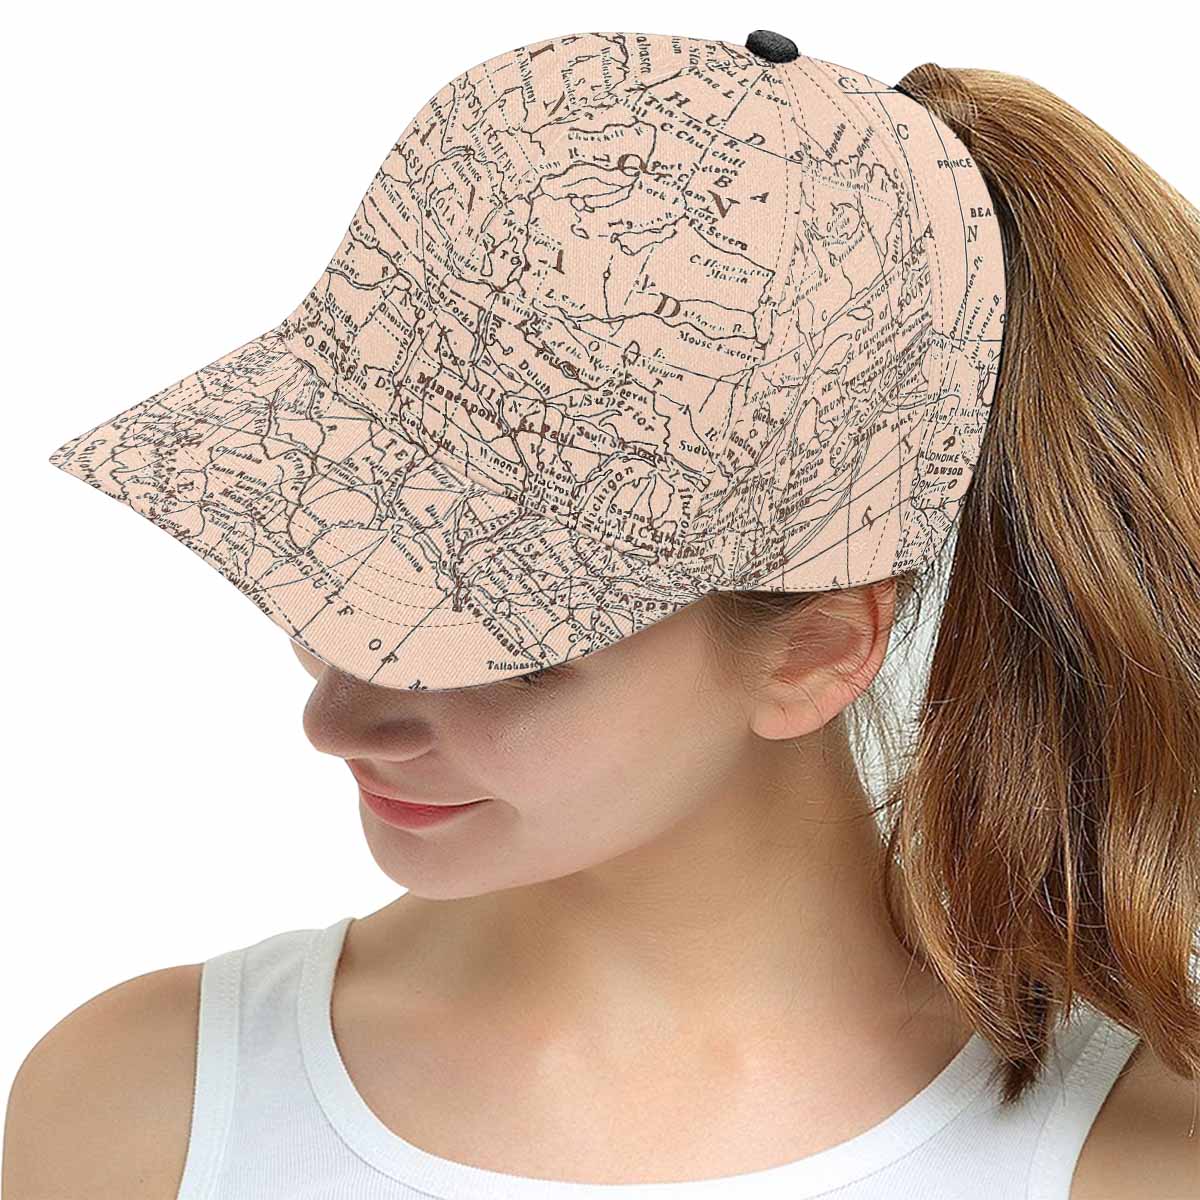 Antique Map design mens or womens deep snapback cap, trucker hat, Design 53